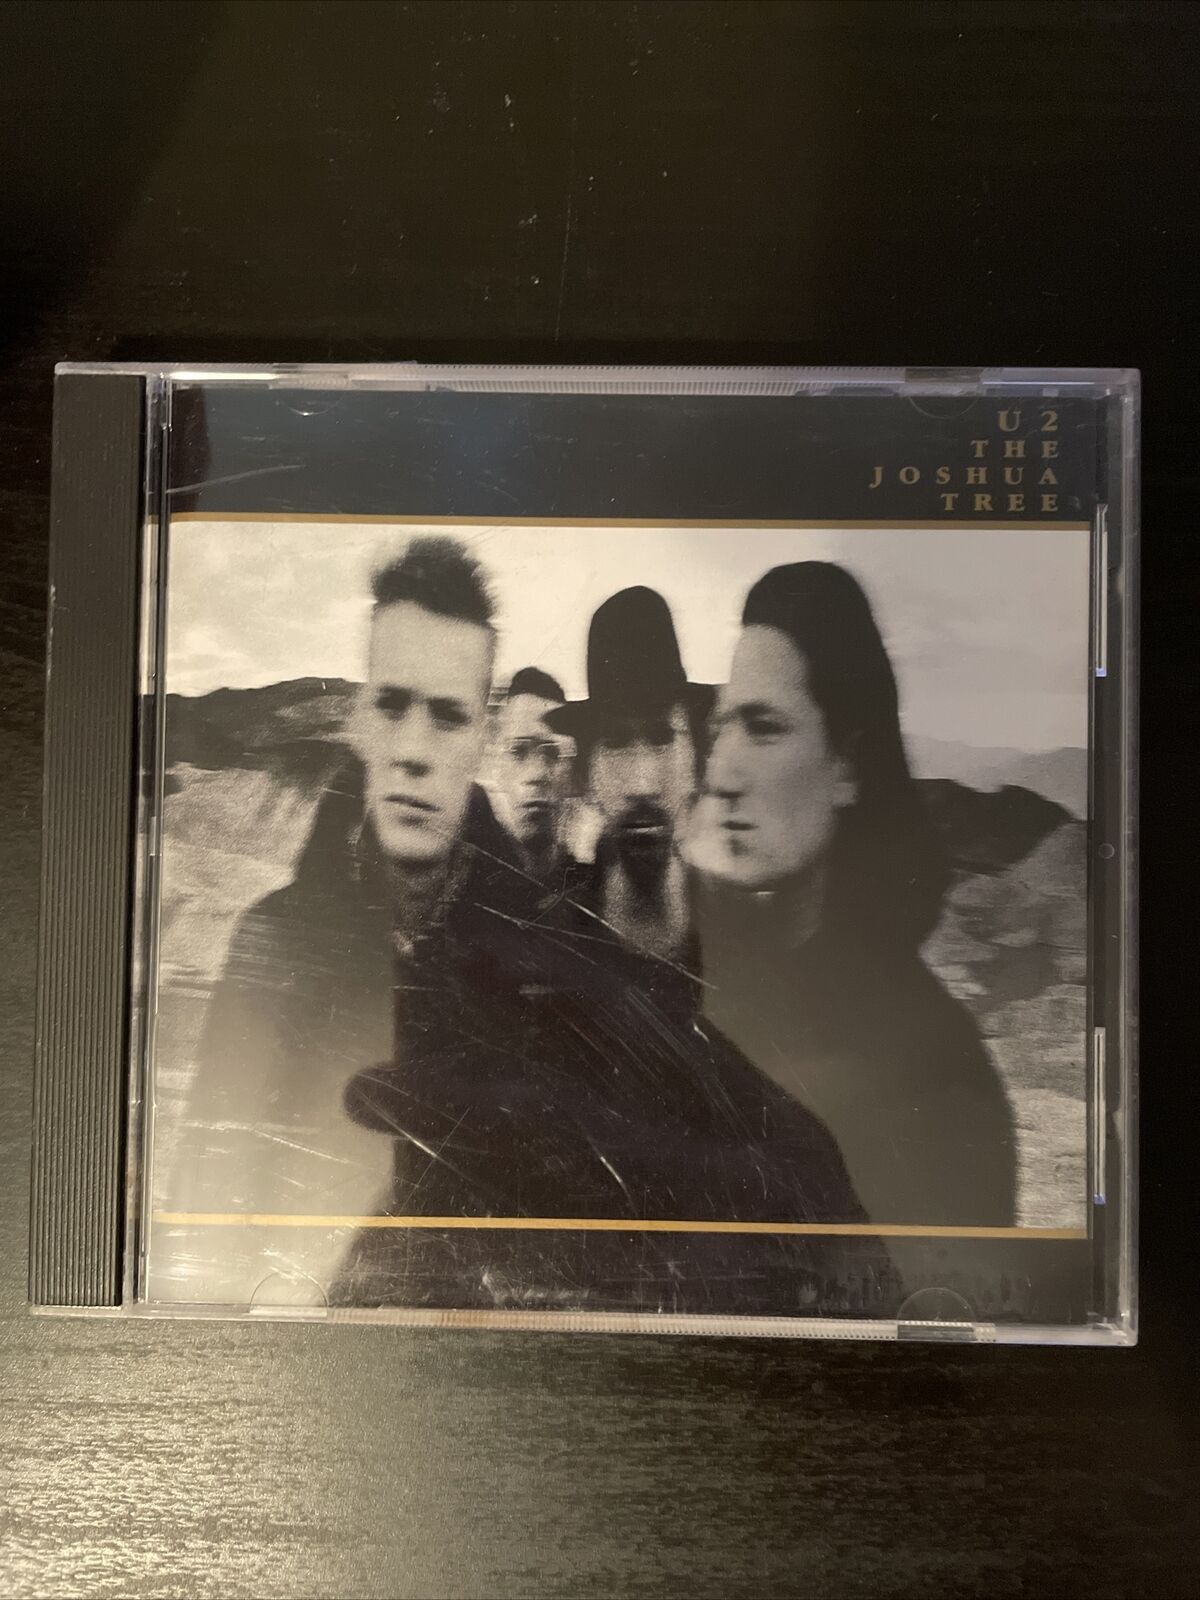 The Joshua Tree by U2 (CD, 1987, Island), b2